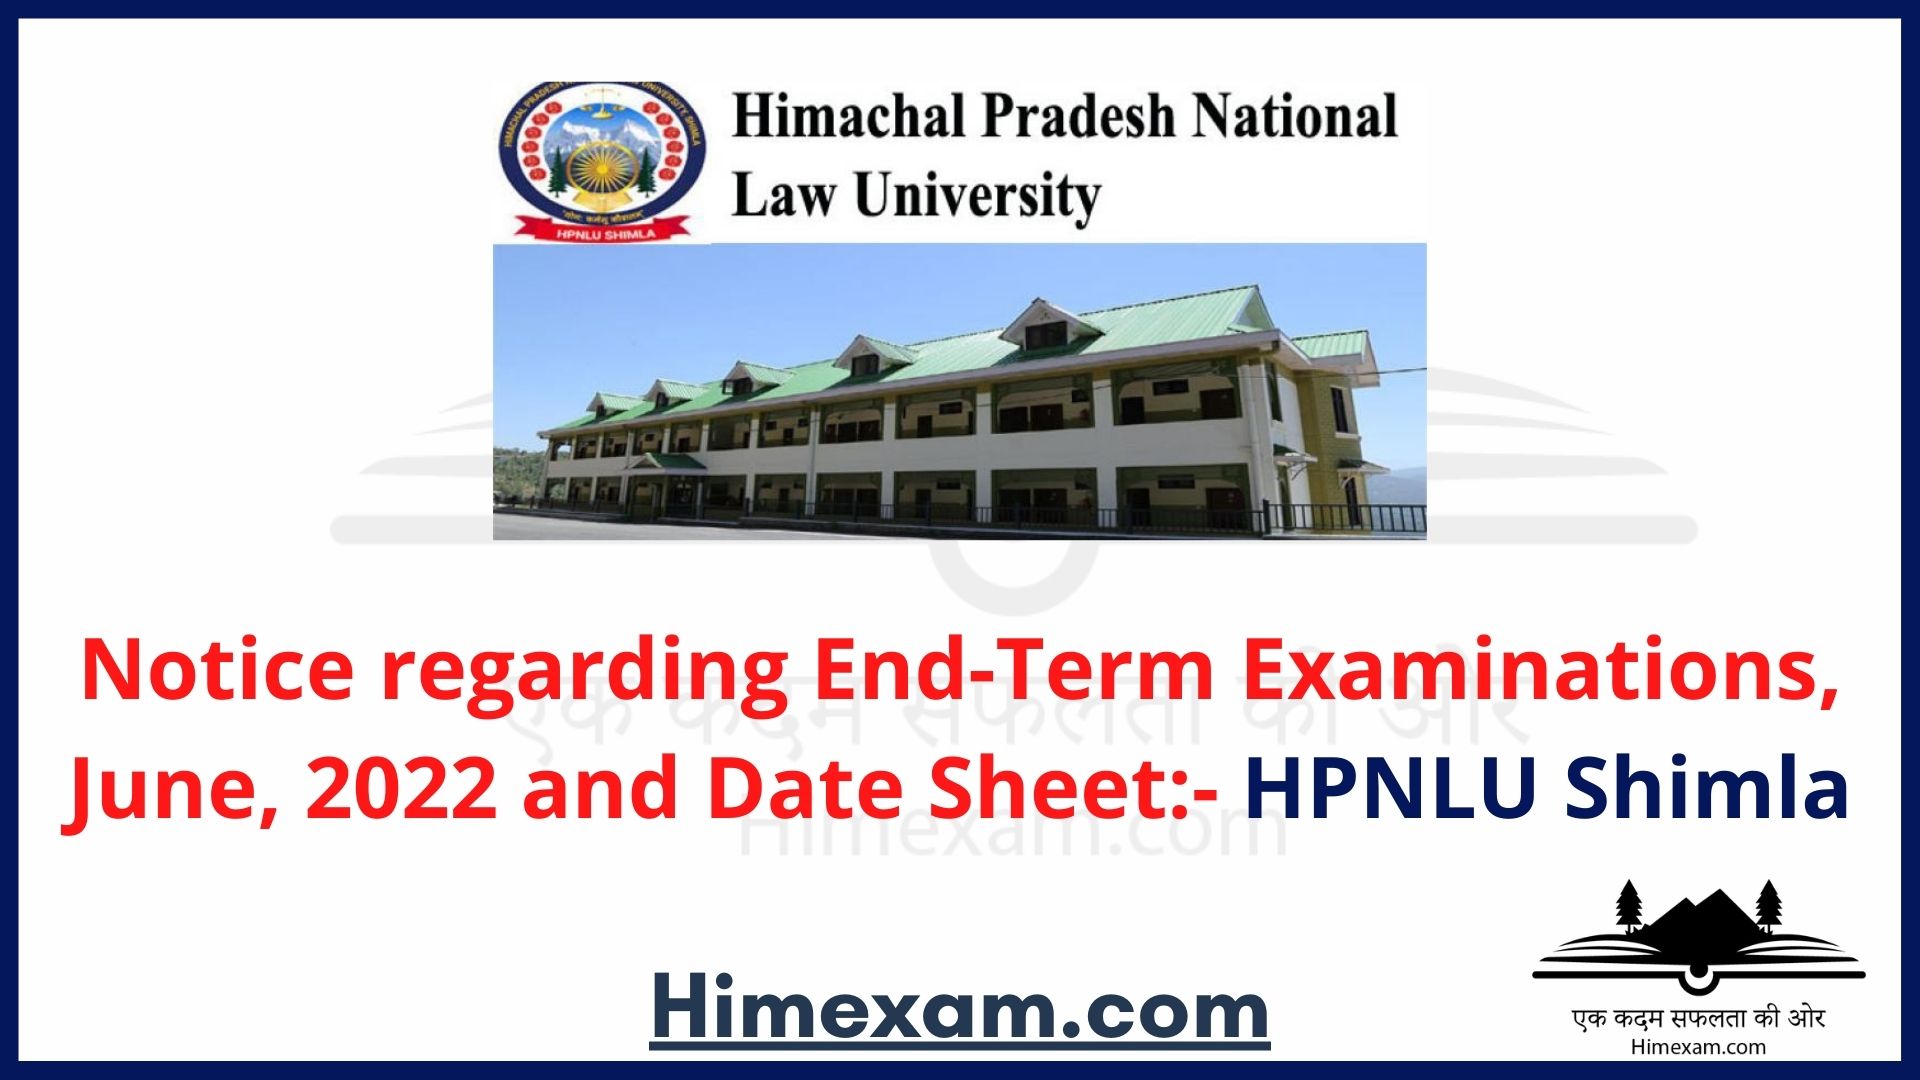 Notice regarding End-Term Examinations, June, 2022 and Date Sheet:- HPNLU Shimla